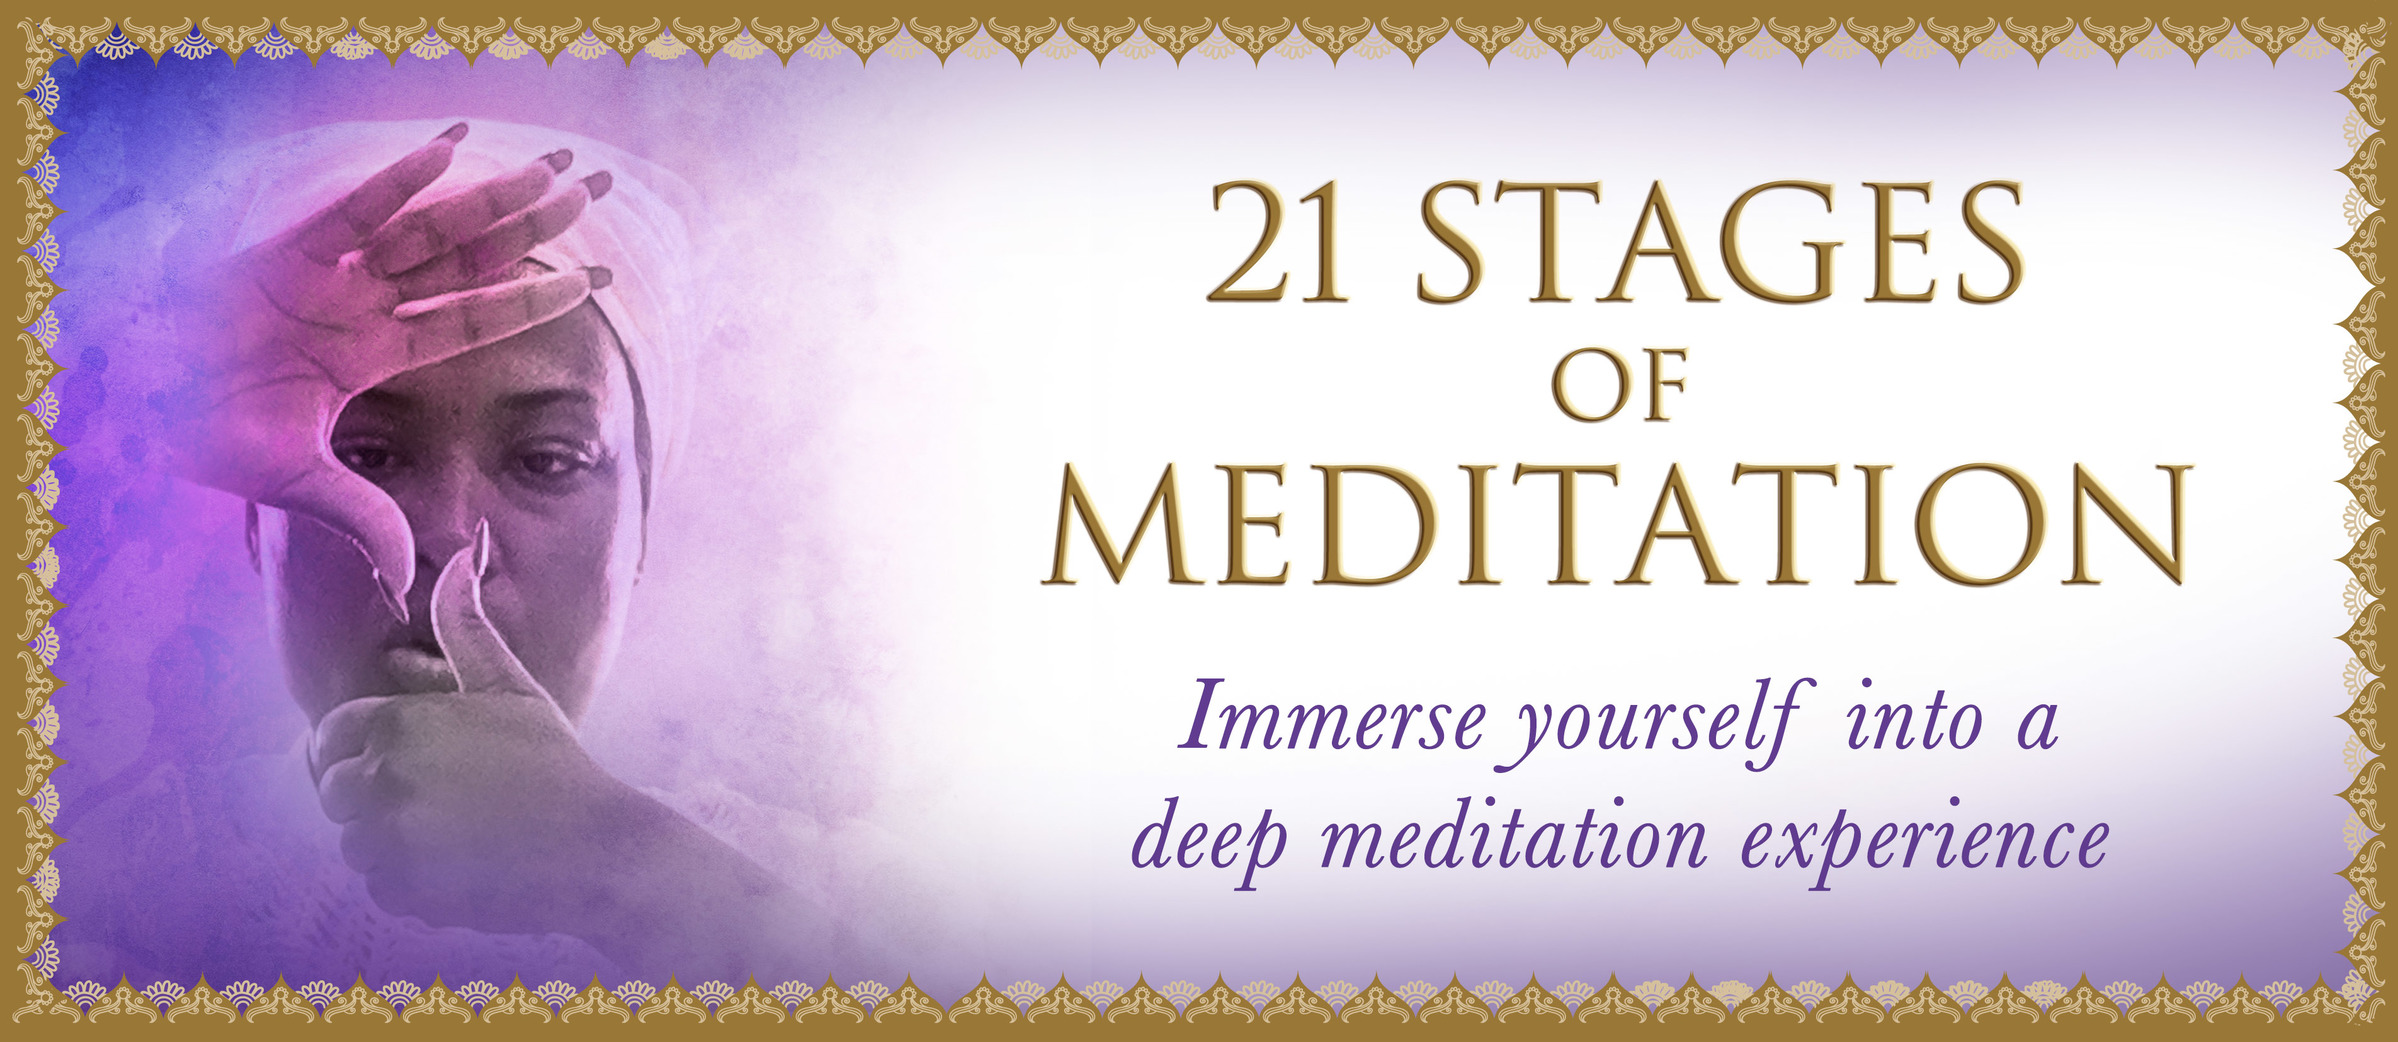 21 Stages of Meditation 2020 